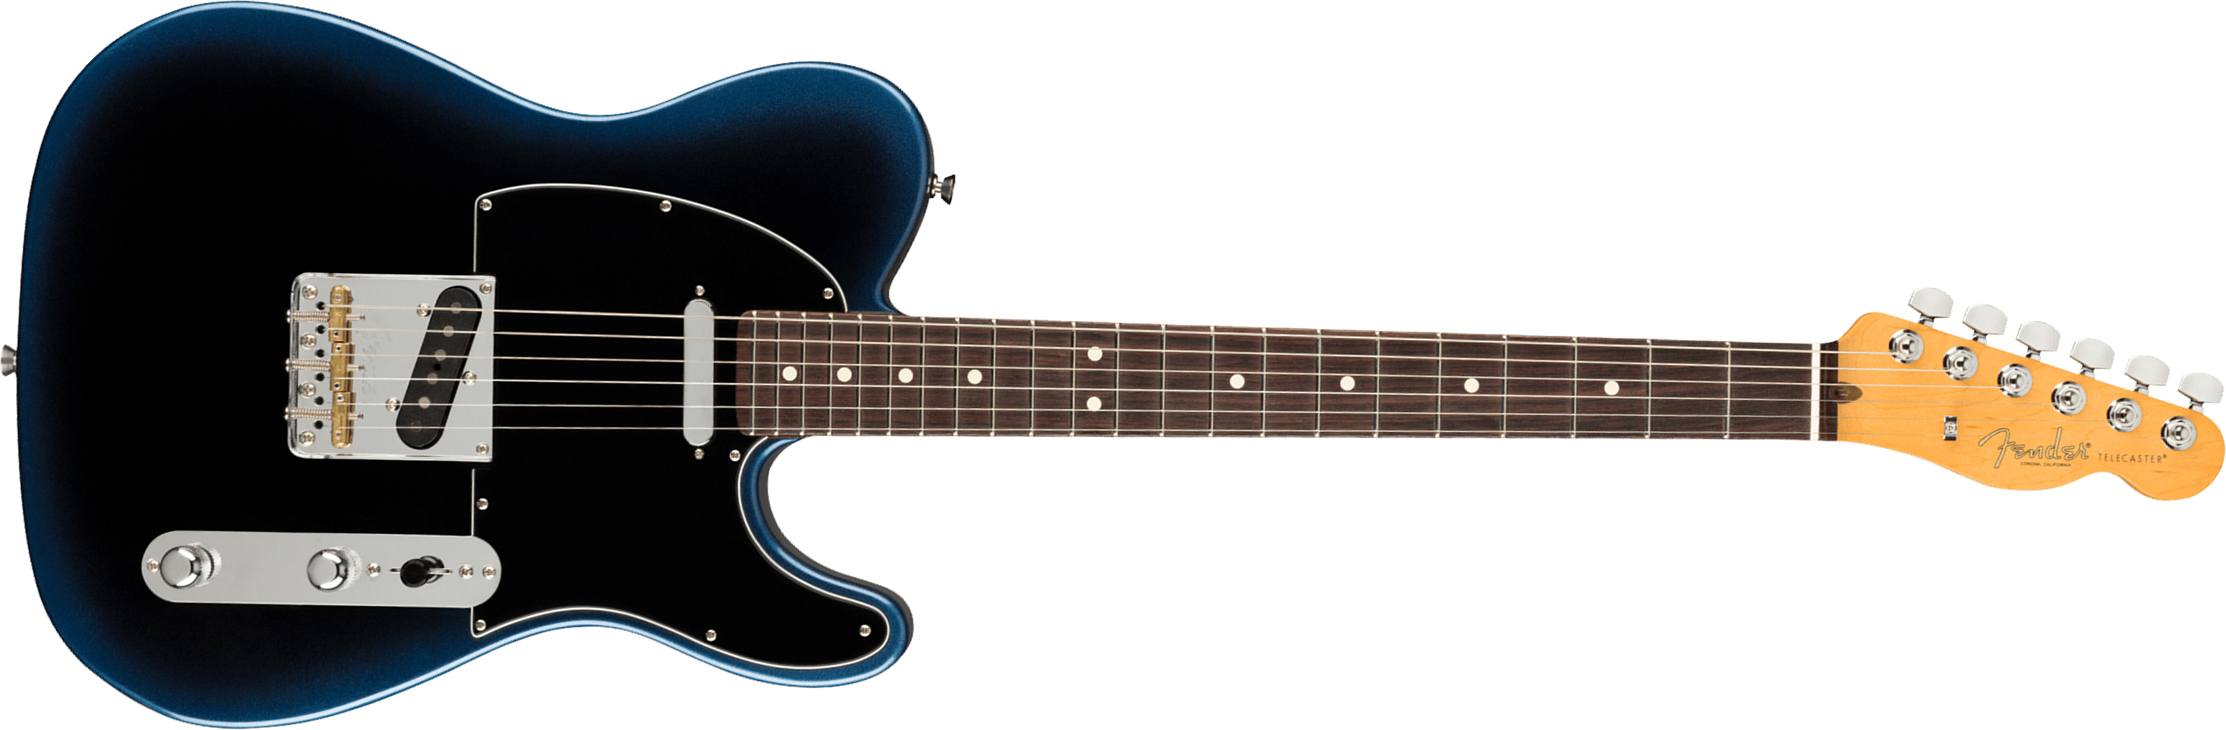 Fender Tele American Professional Ii Usa Rw - Dark Night - Televorm elektrische gitaar - Main picture